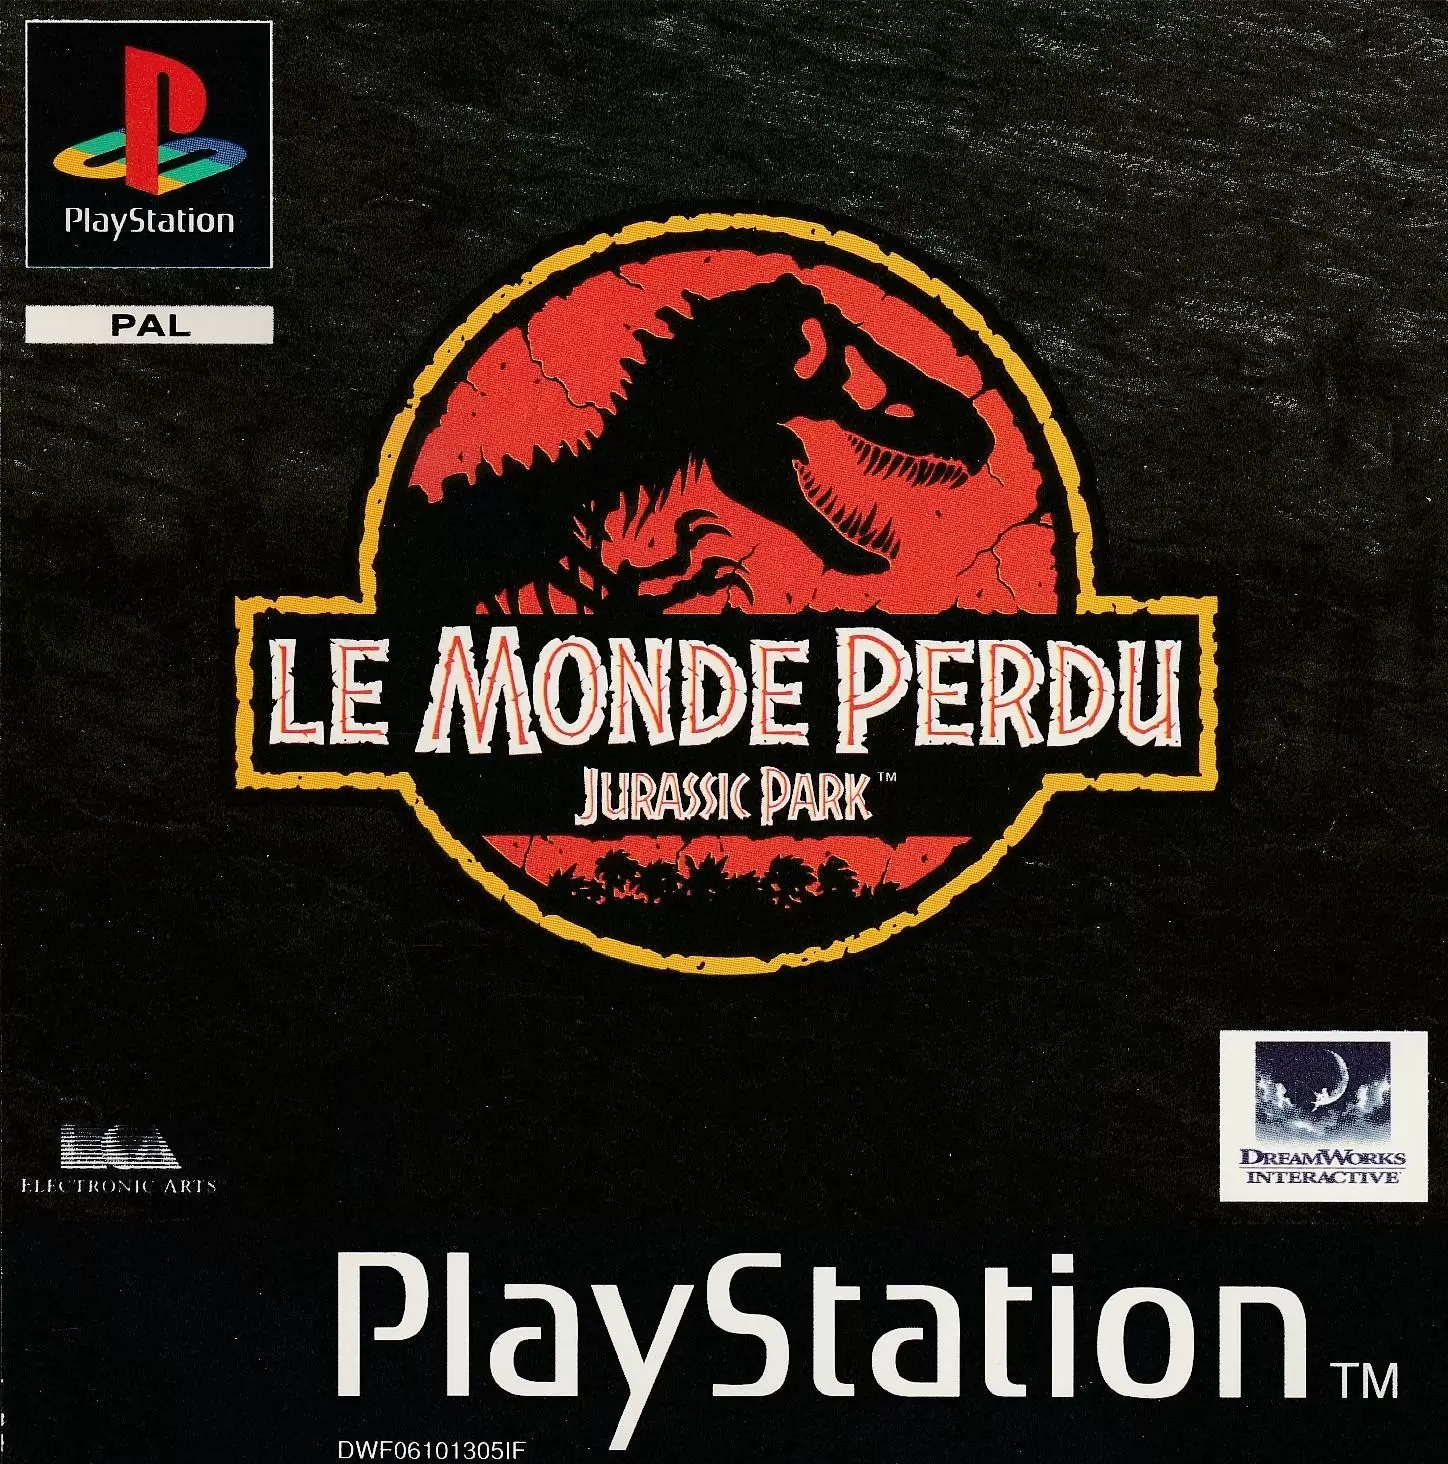 Playstation games - Le Monde Perdu : Jurassic Park